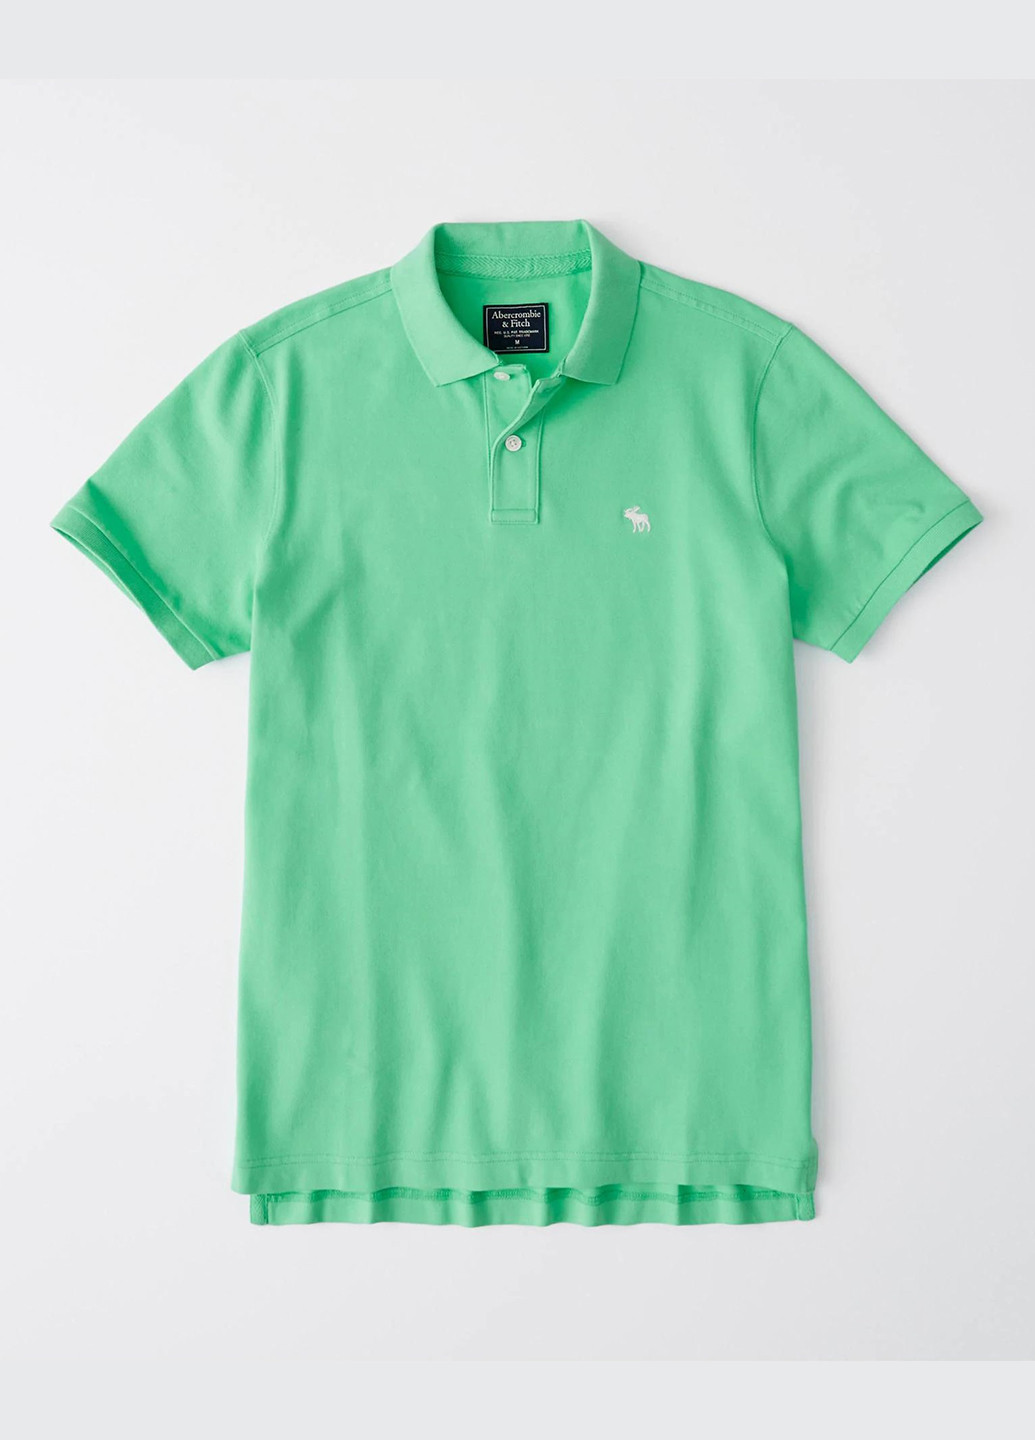 Салатовая футболка-поло для мужчин Abercrombie & Fitch с логотипом